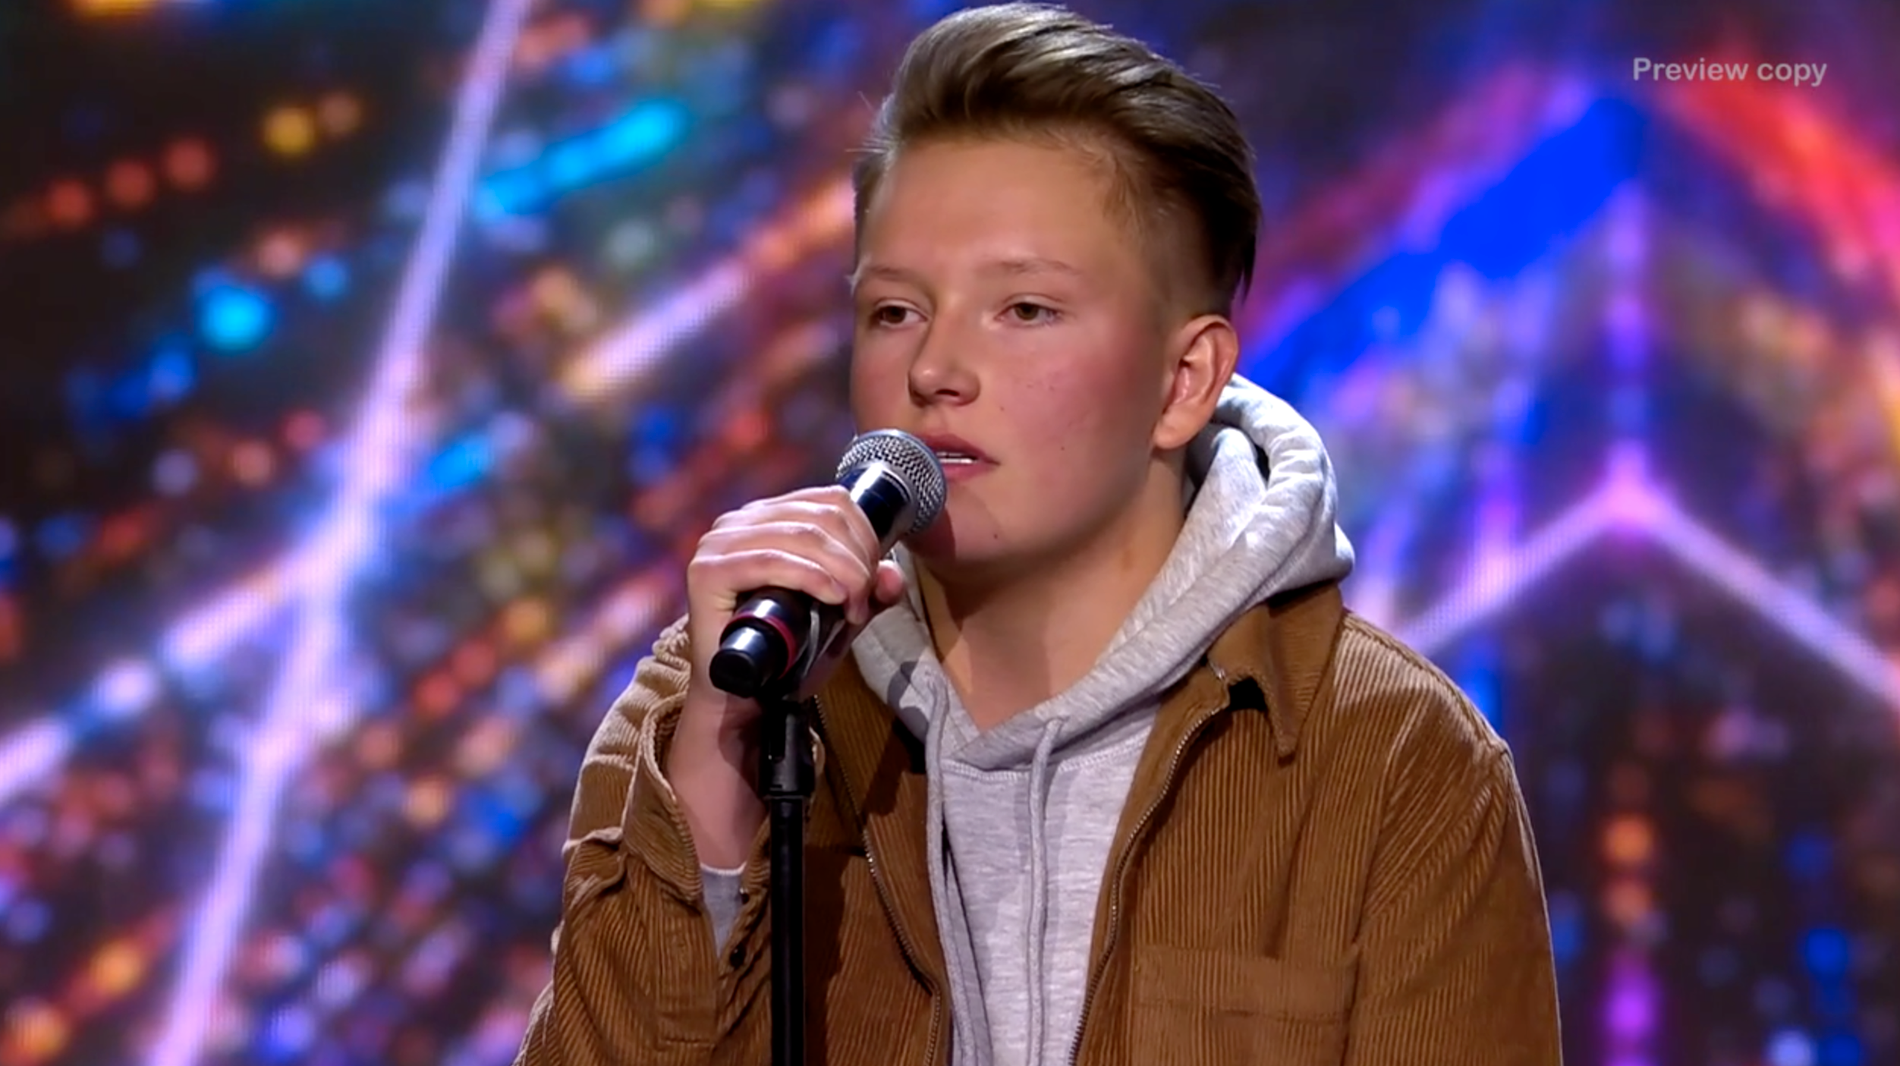 Elwin Heikkinen, 15, framför Coldplays låt ”Fix You”. 